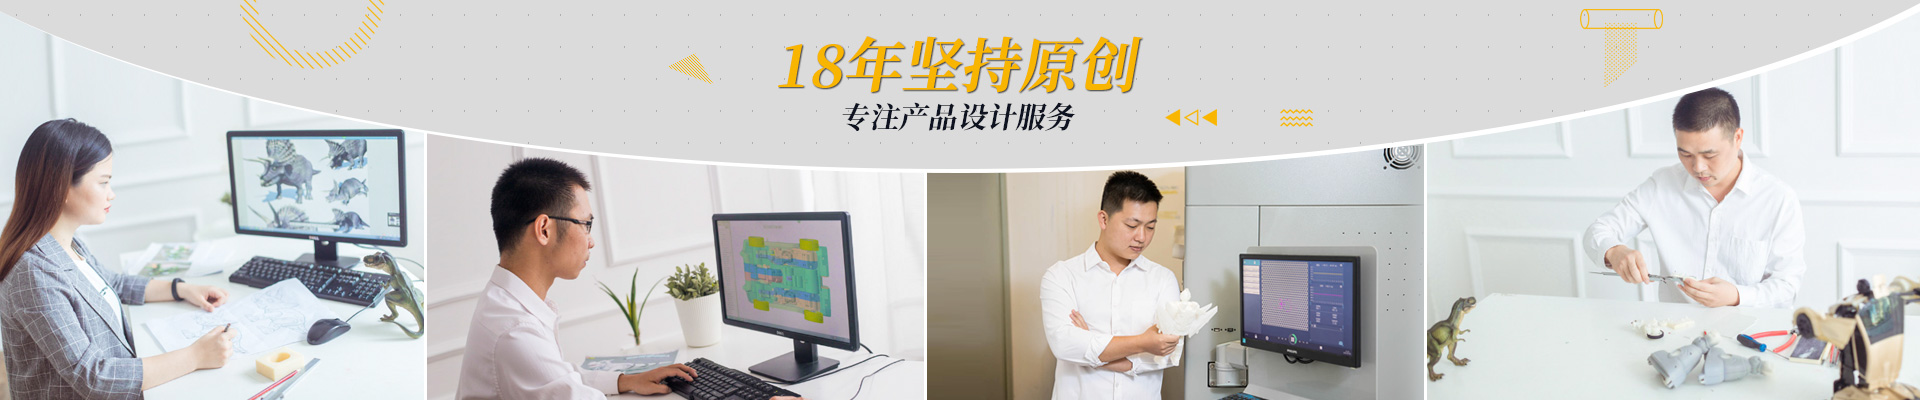 jbo竞博-18年专注产品设计服务 坚持原创